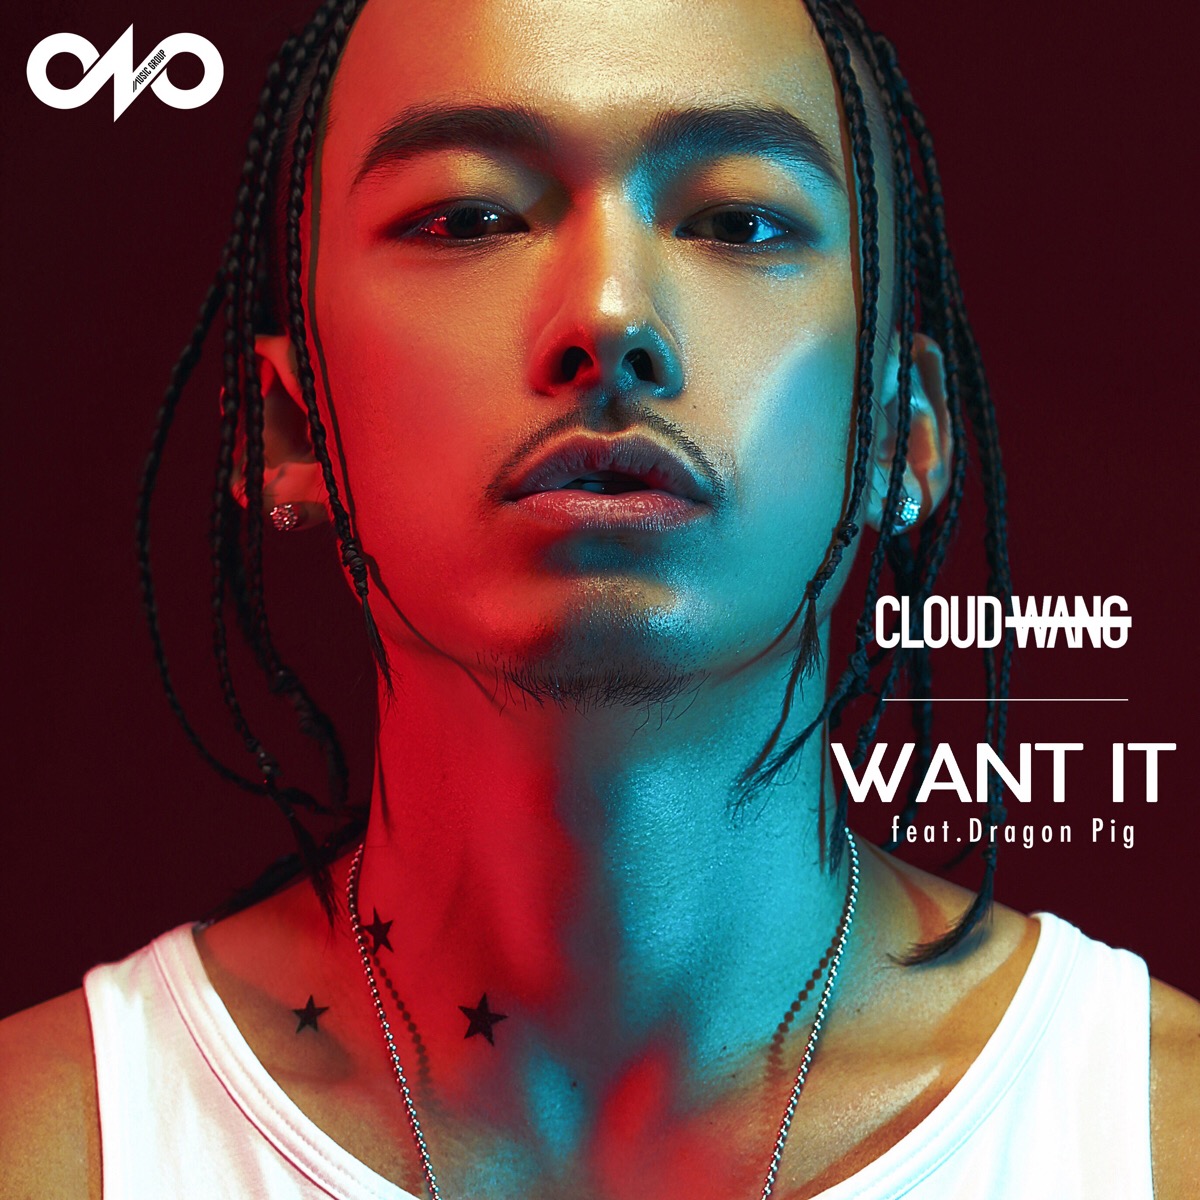 want it — cloudwang/dragonpig